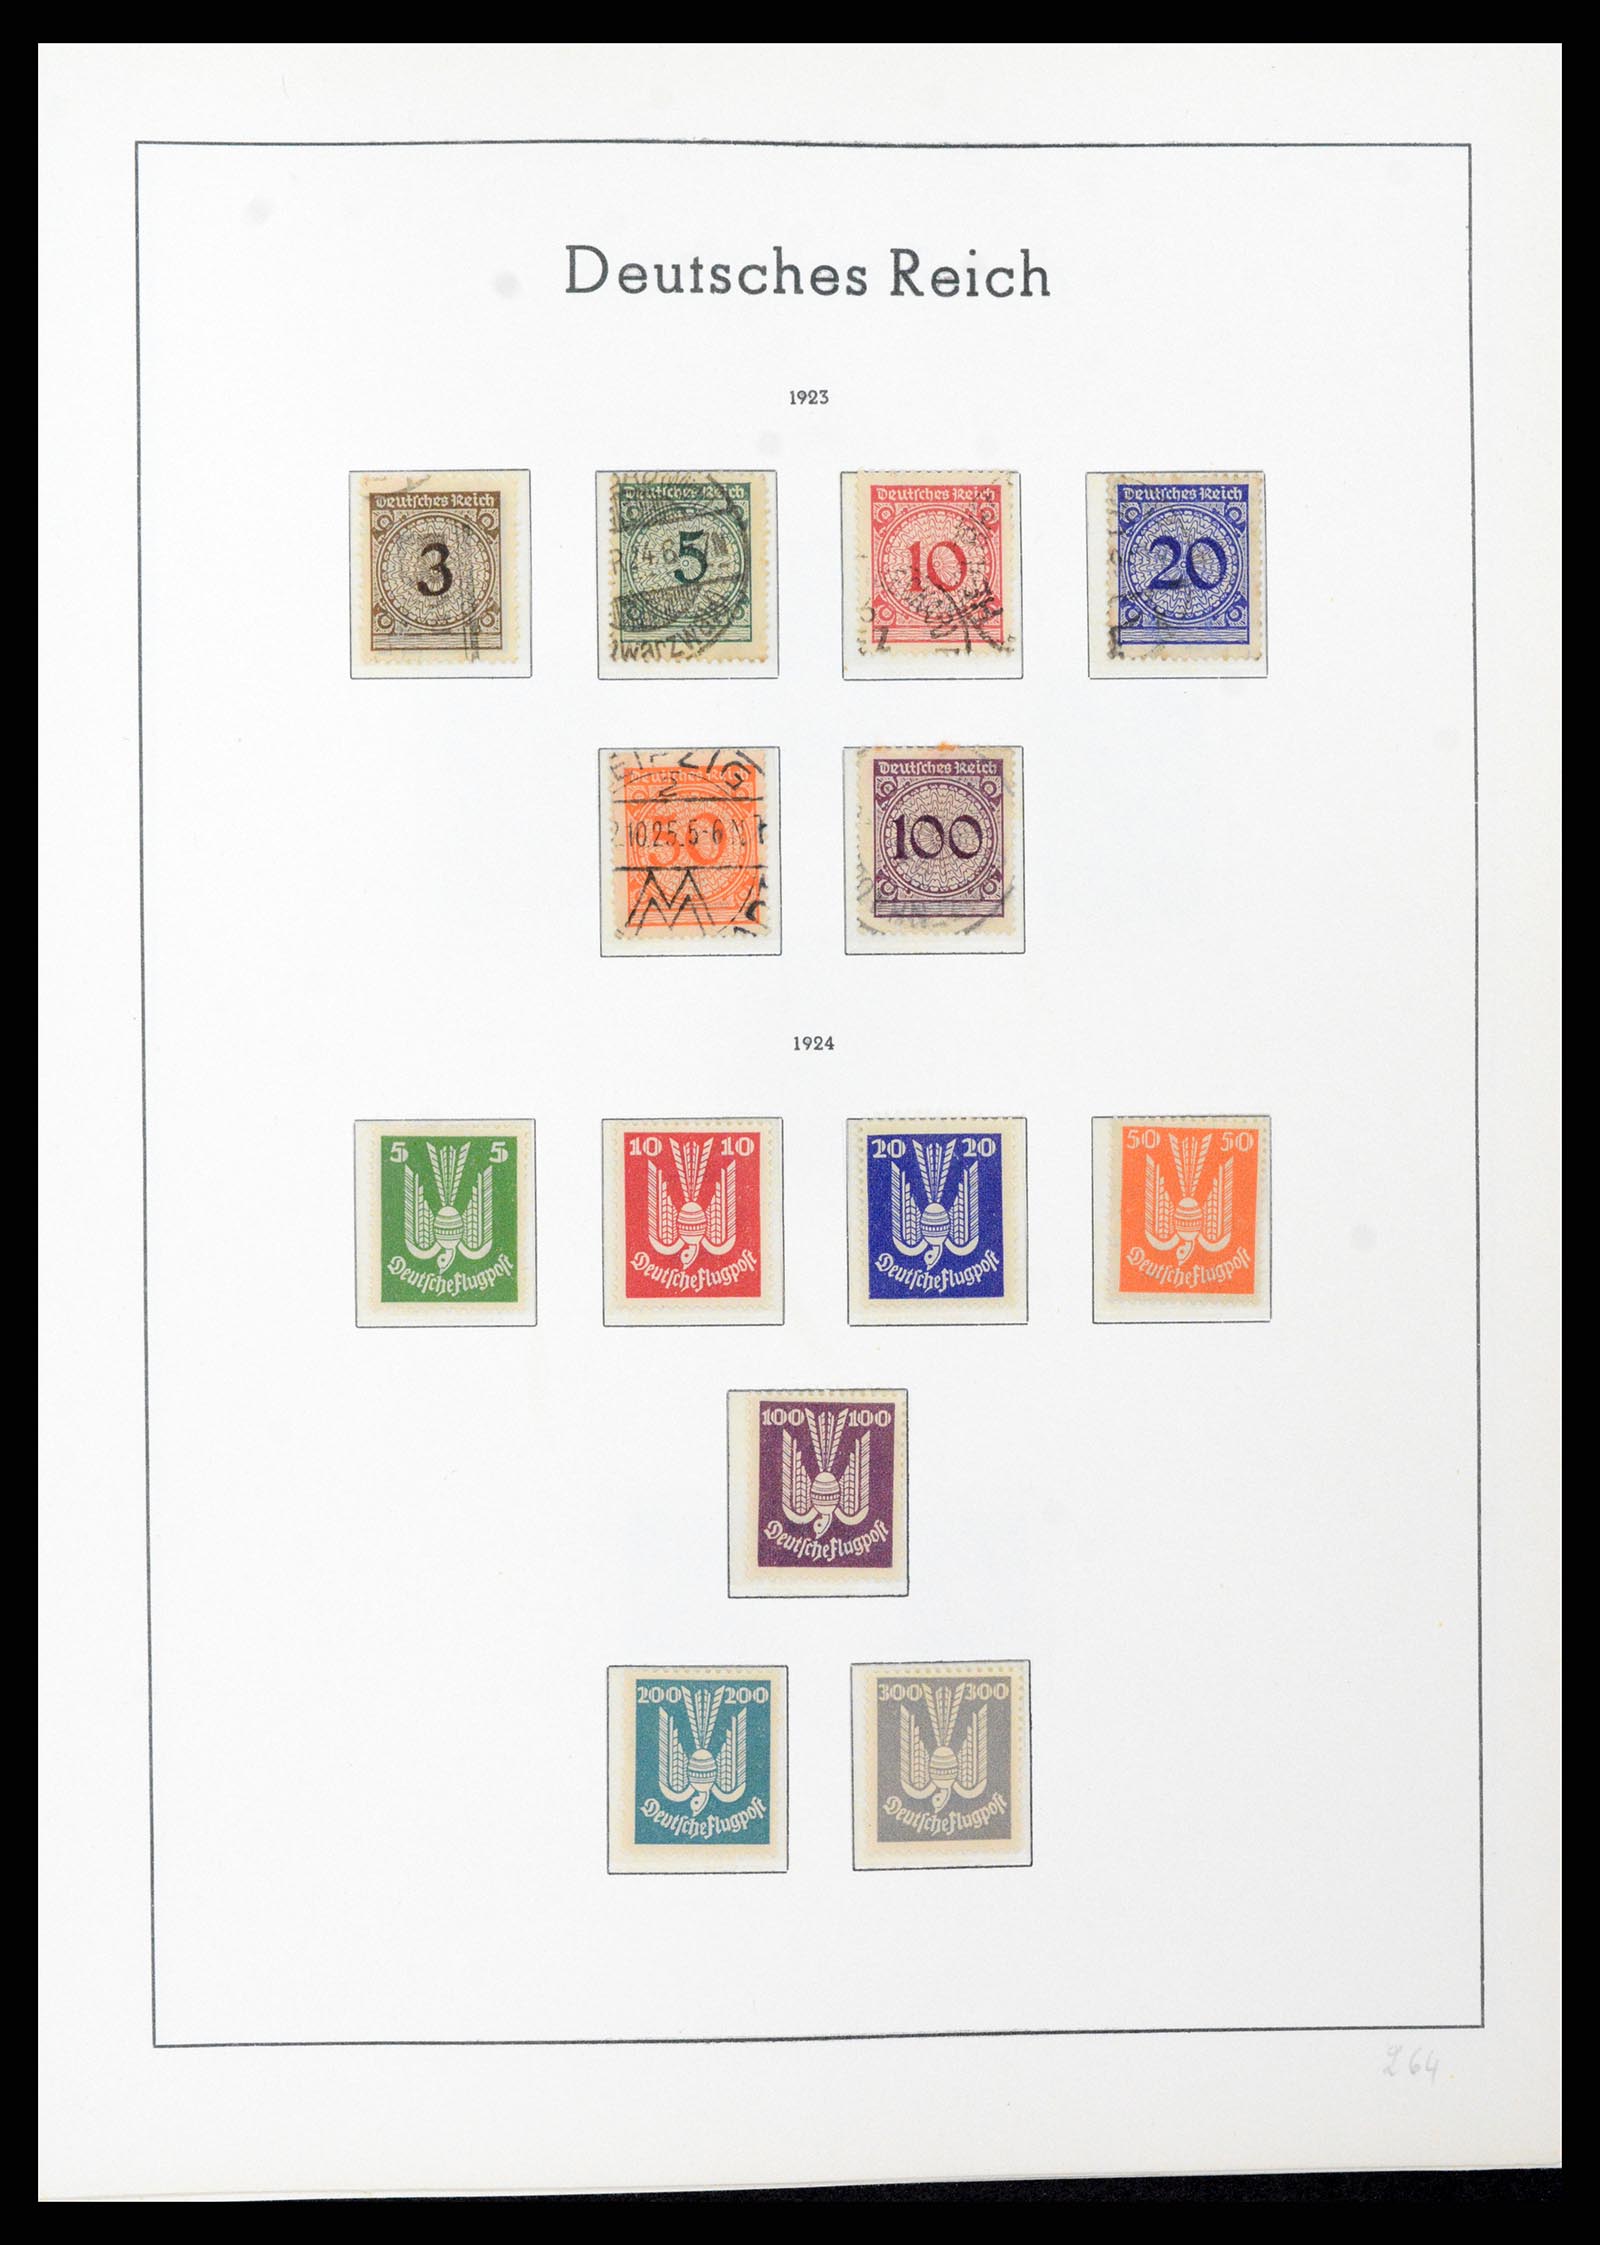 37589 033 - Stamp collection 37589 German Reich 1872-1945.